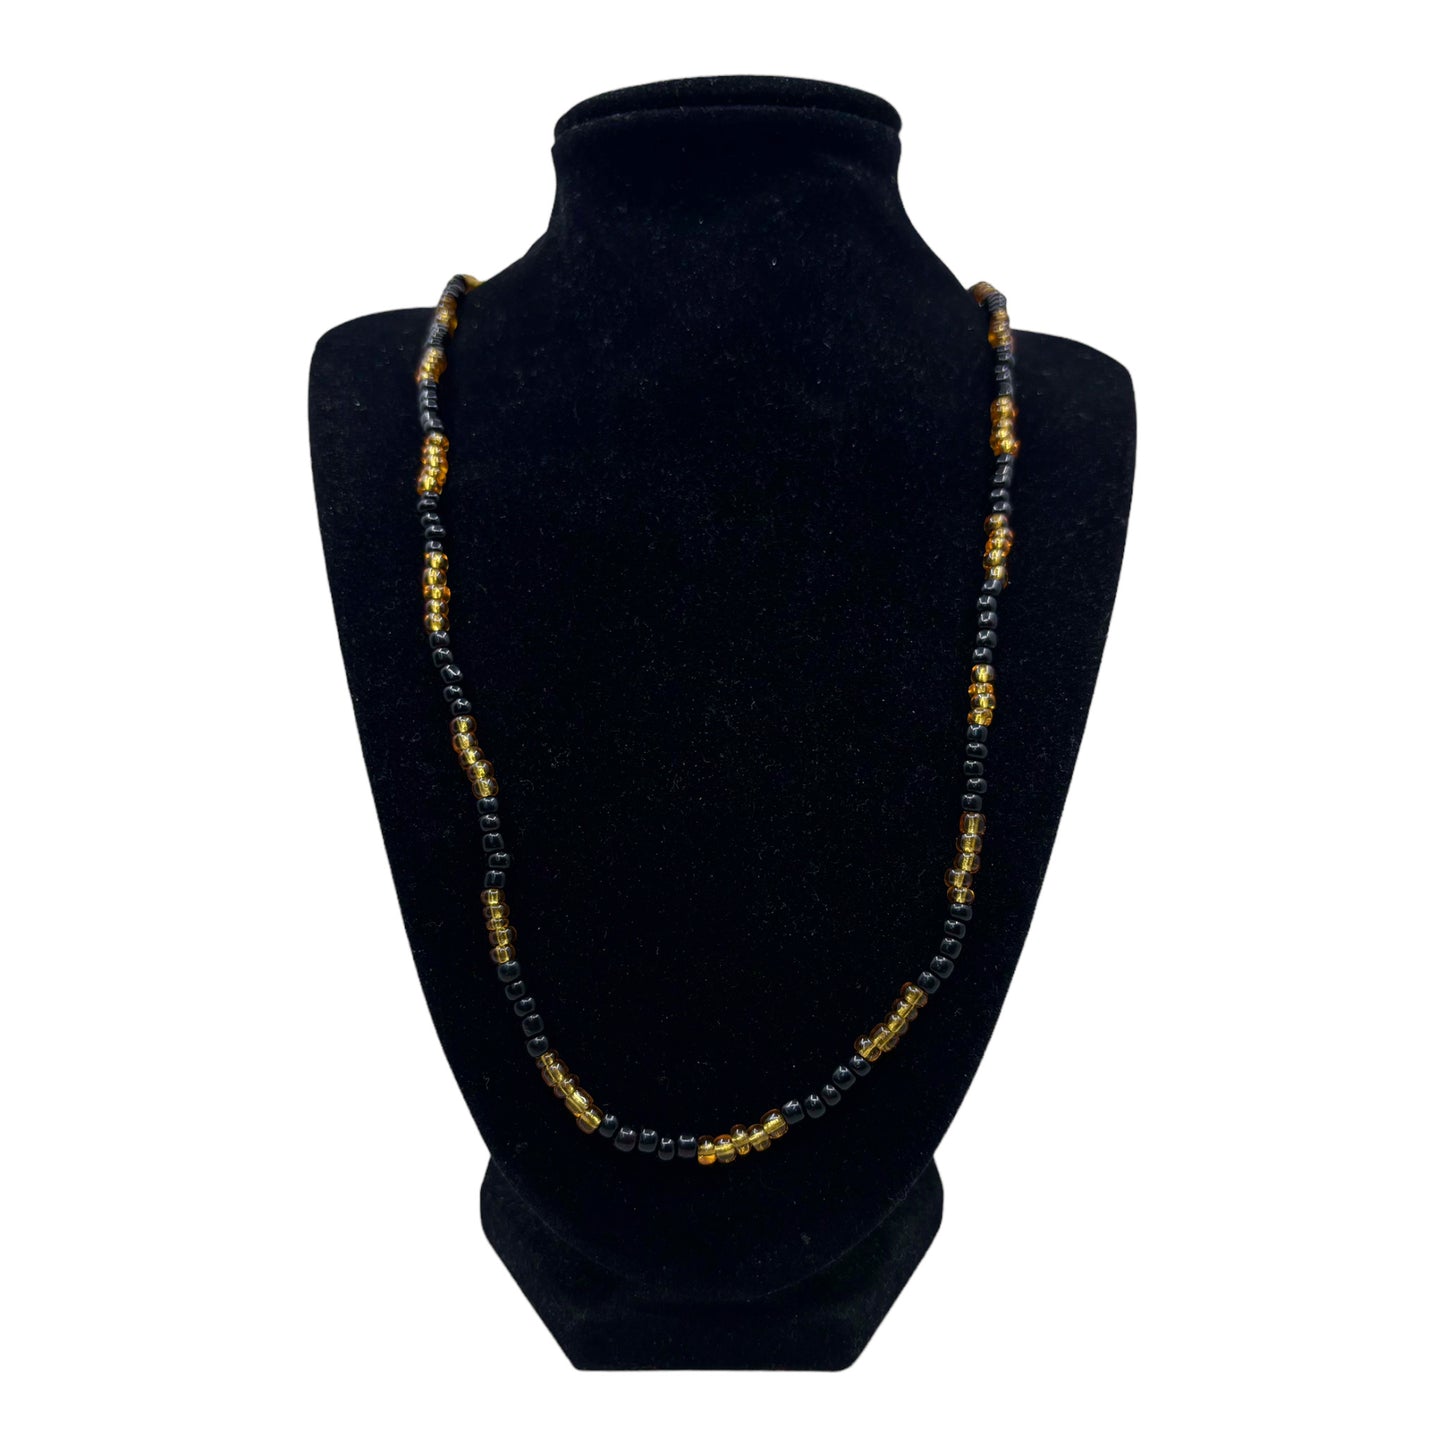 Neck Beads - Black & Gold